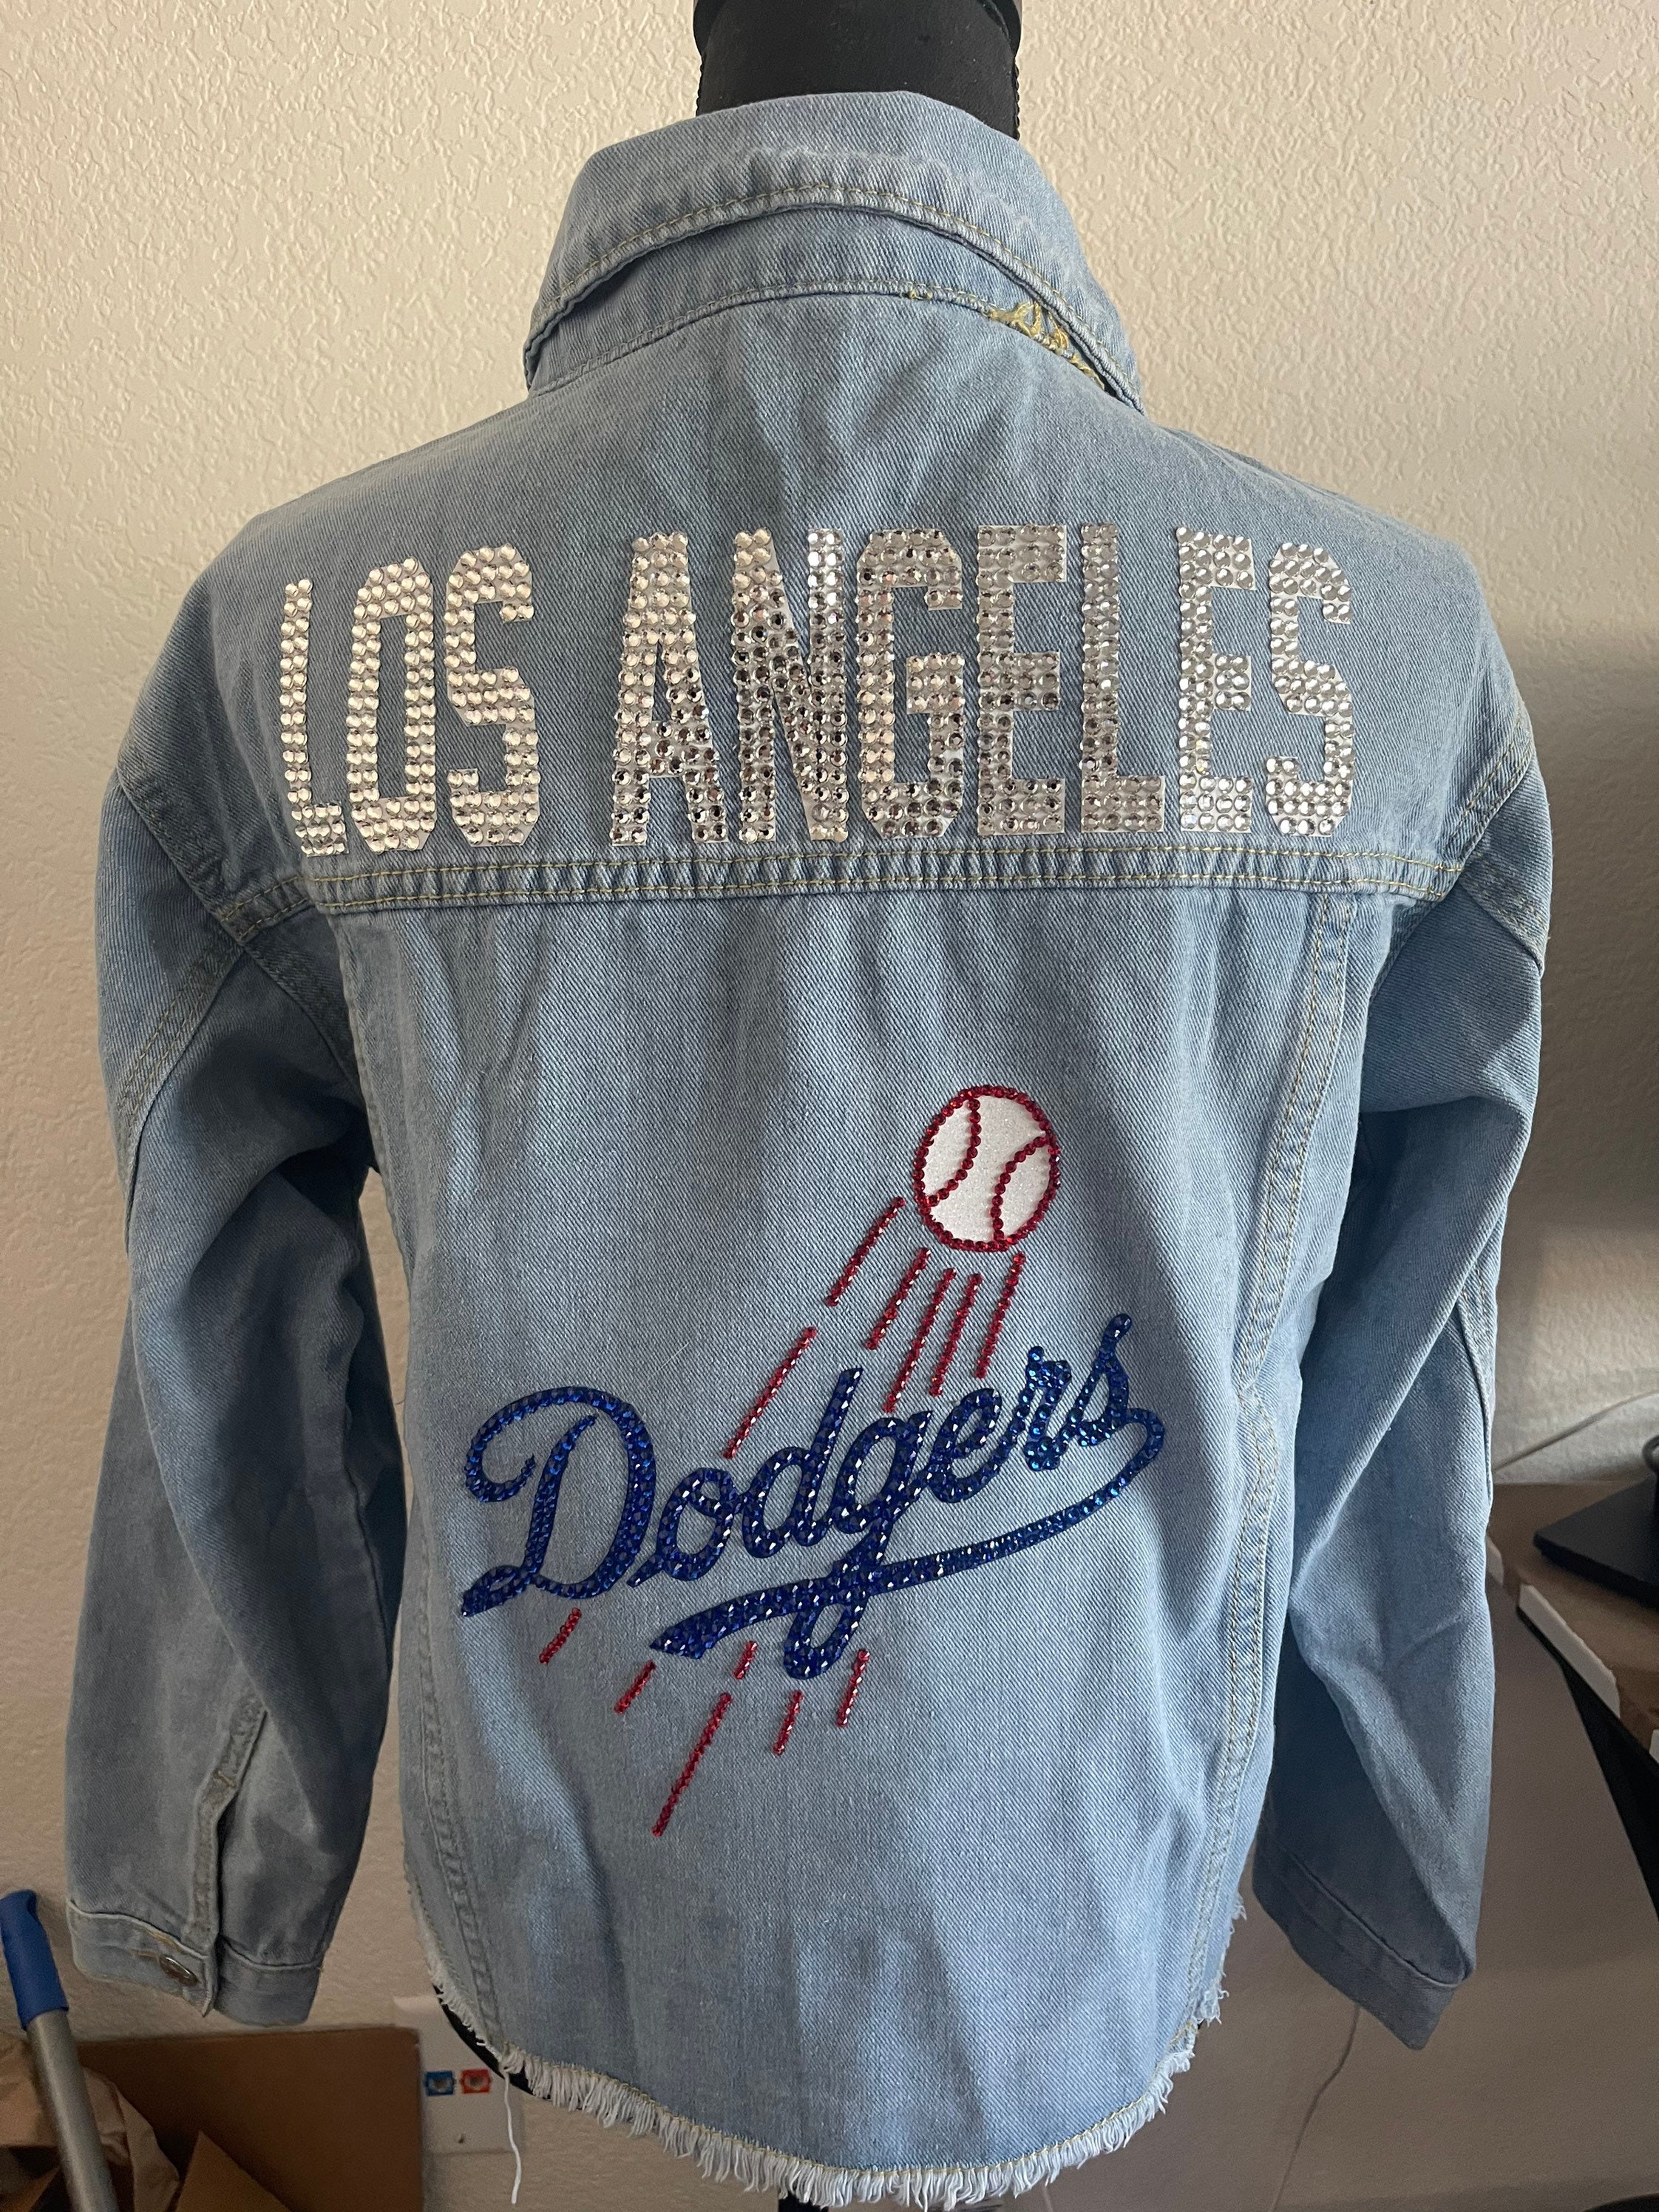 Los Angeles Dodgers MLB Womens Denim Days Jacket